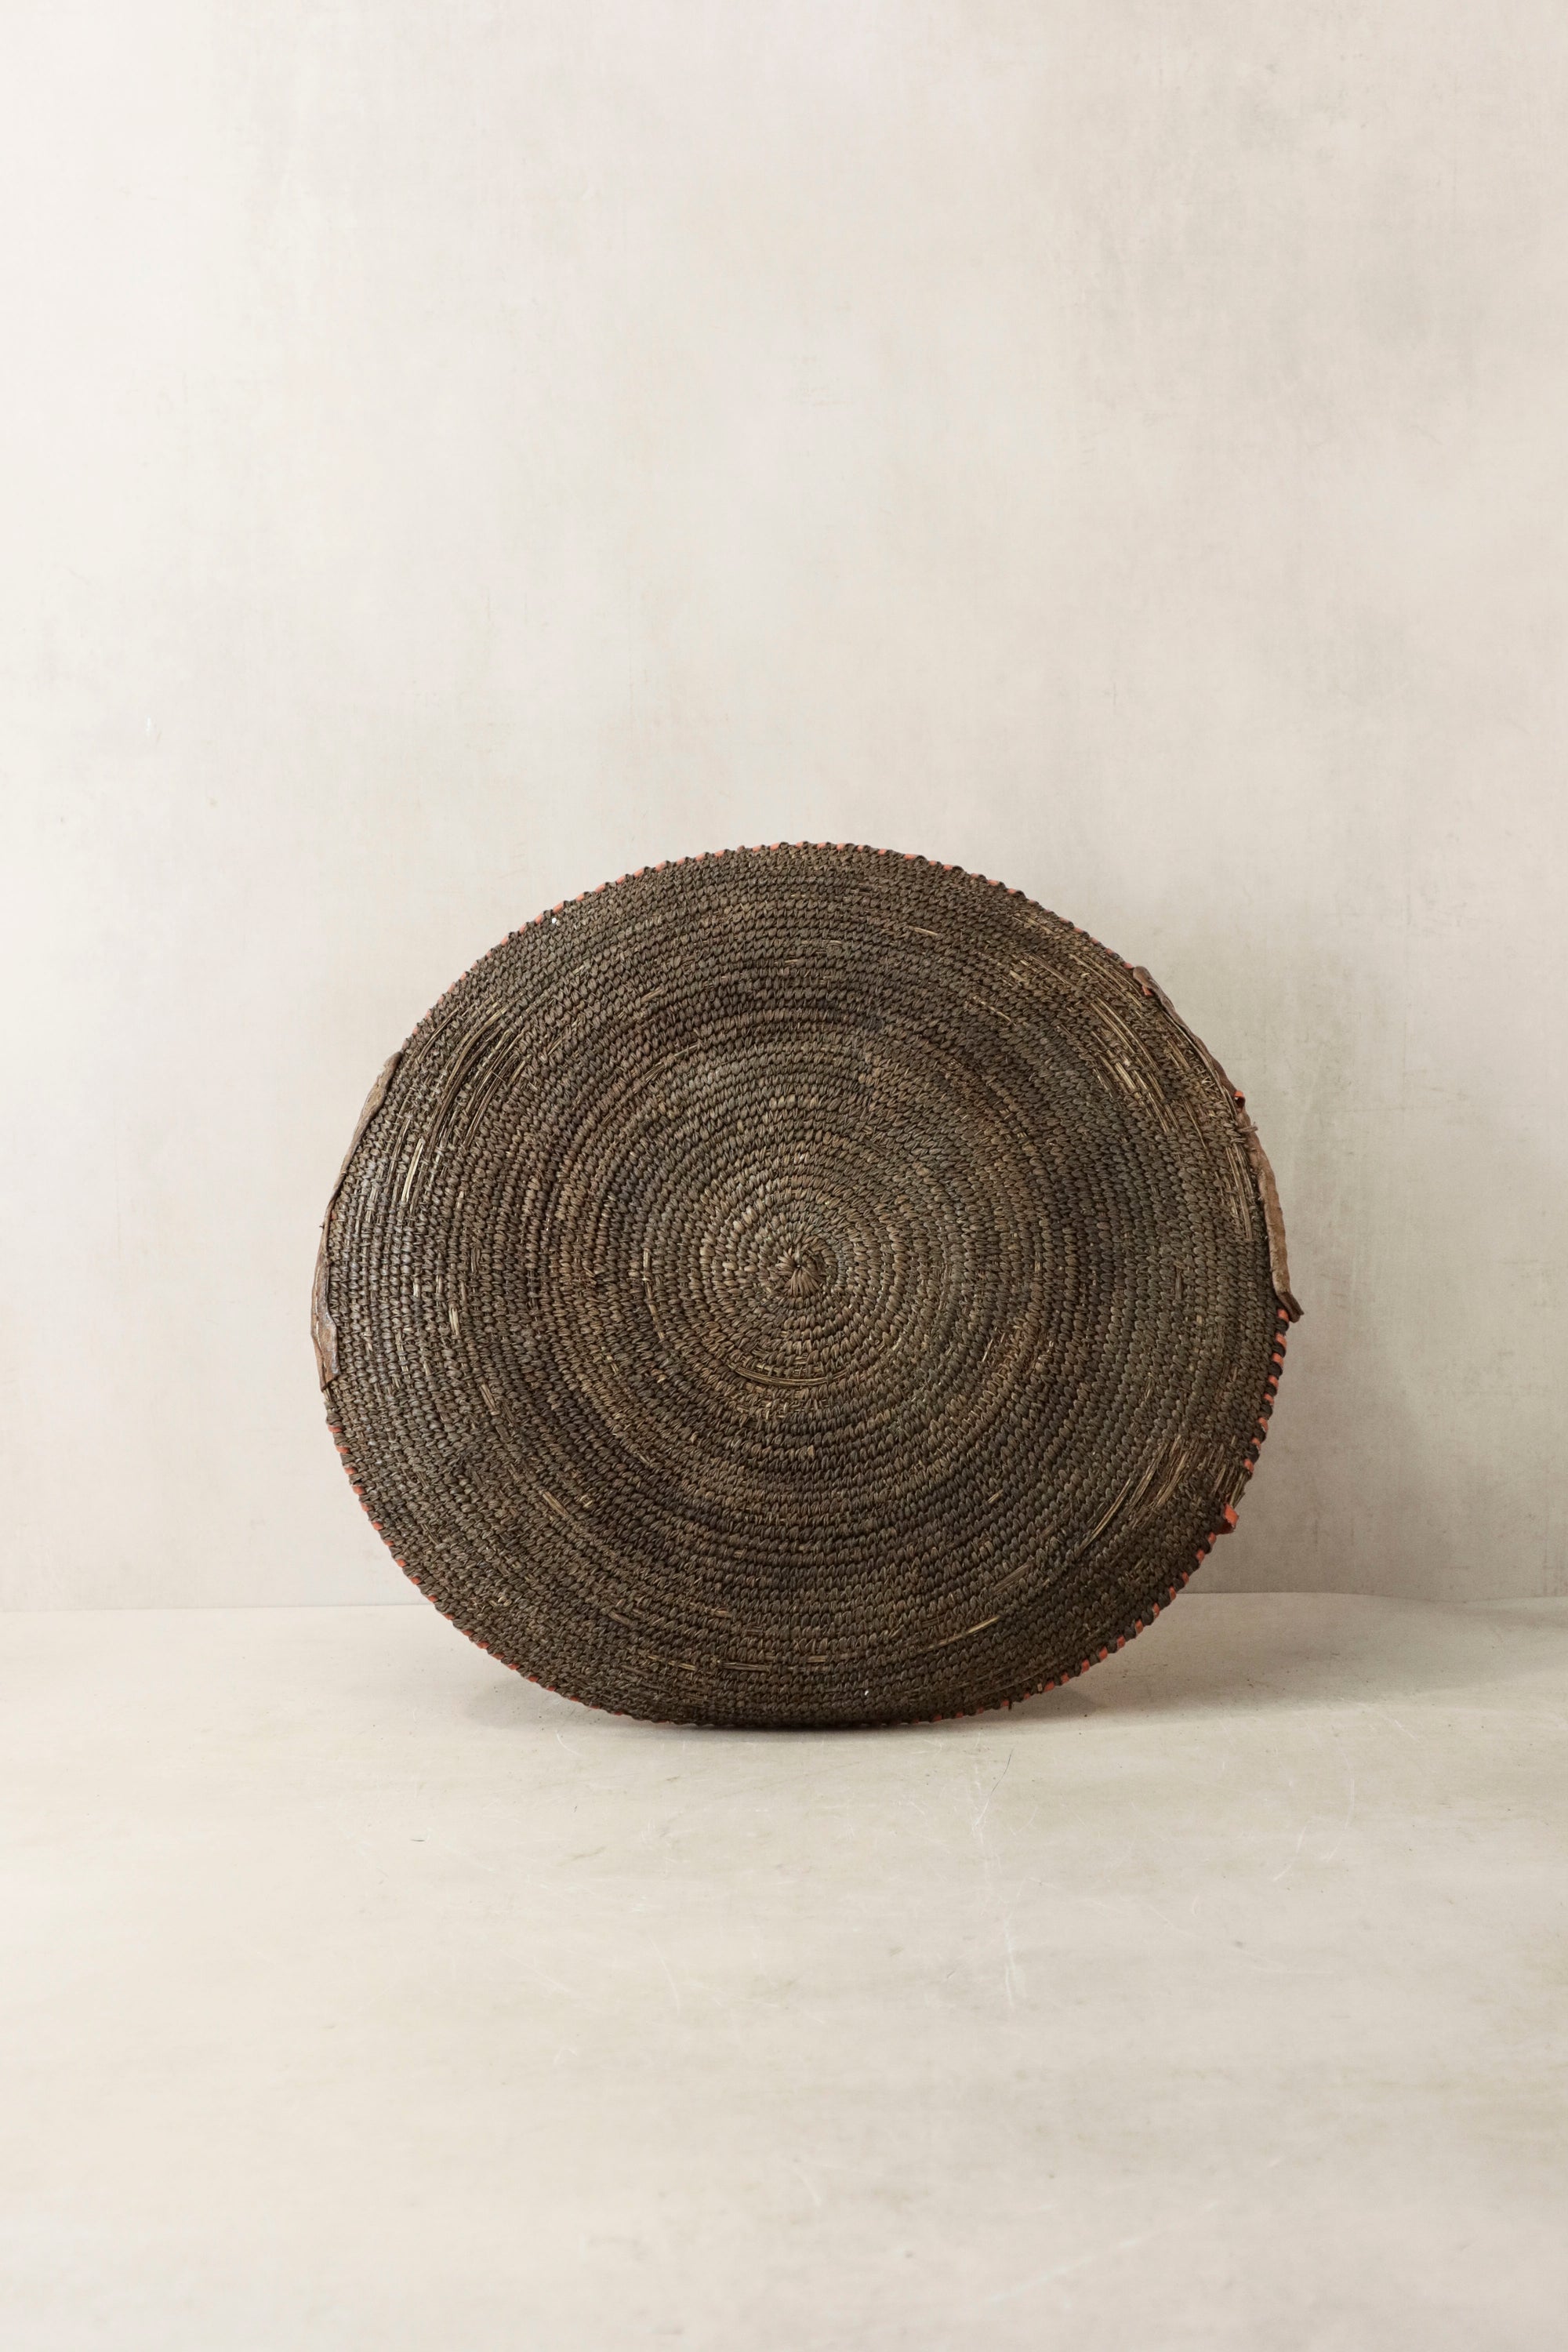 Handwoven Wall Basket - Chad - 41.10